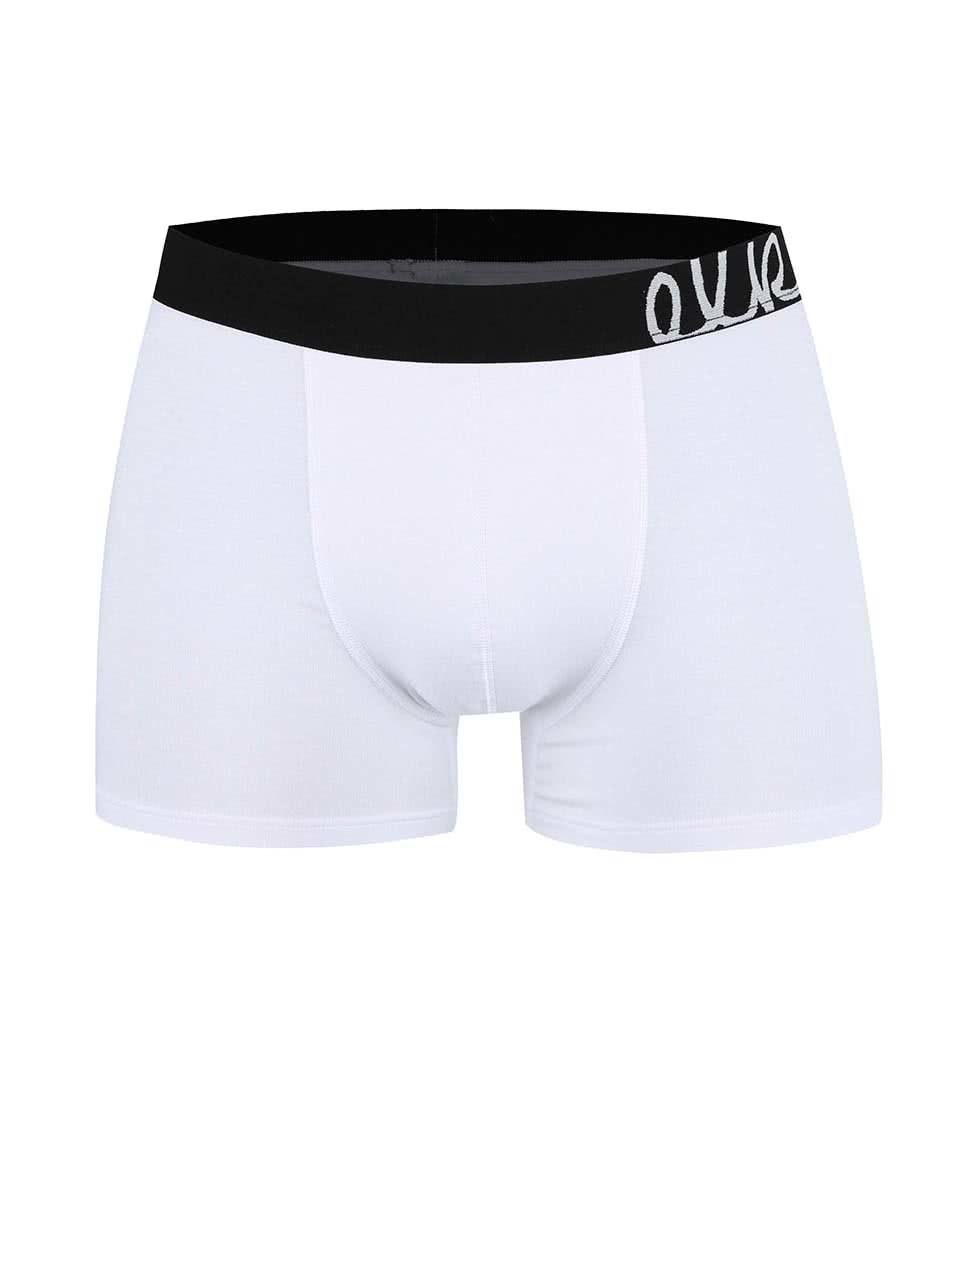 Bílé boxerky s černou gumou El.Ka Underwear